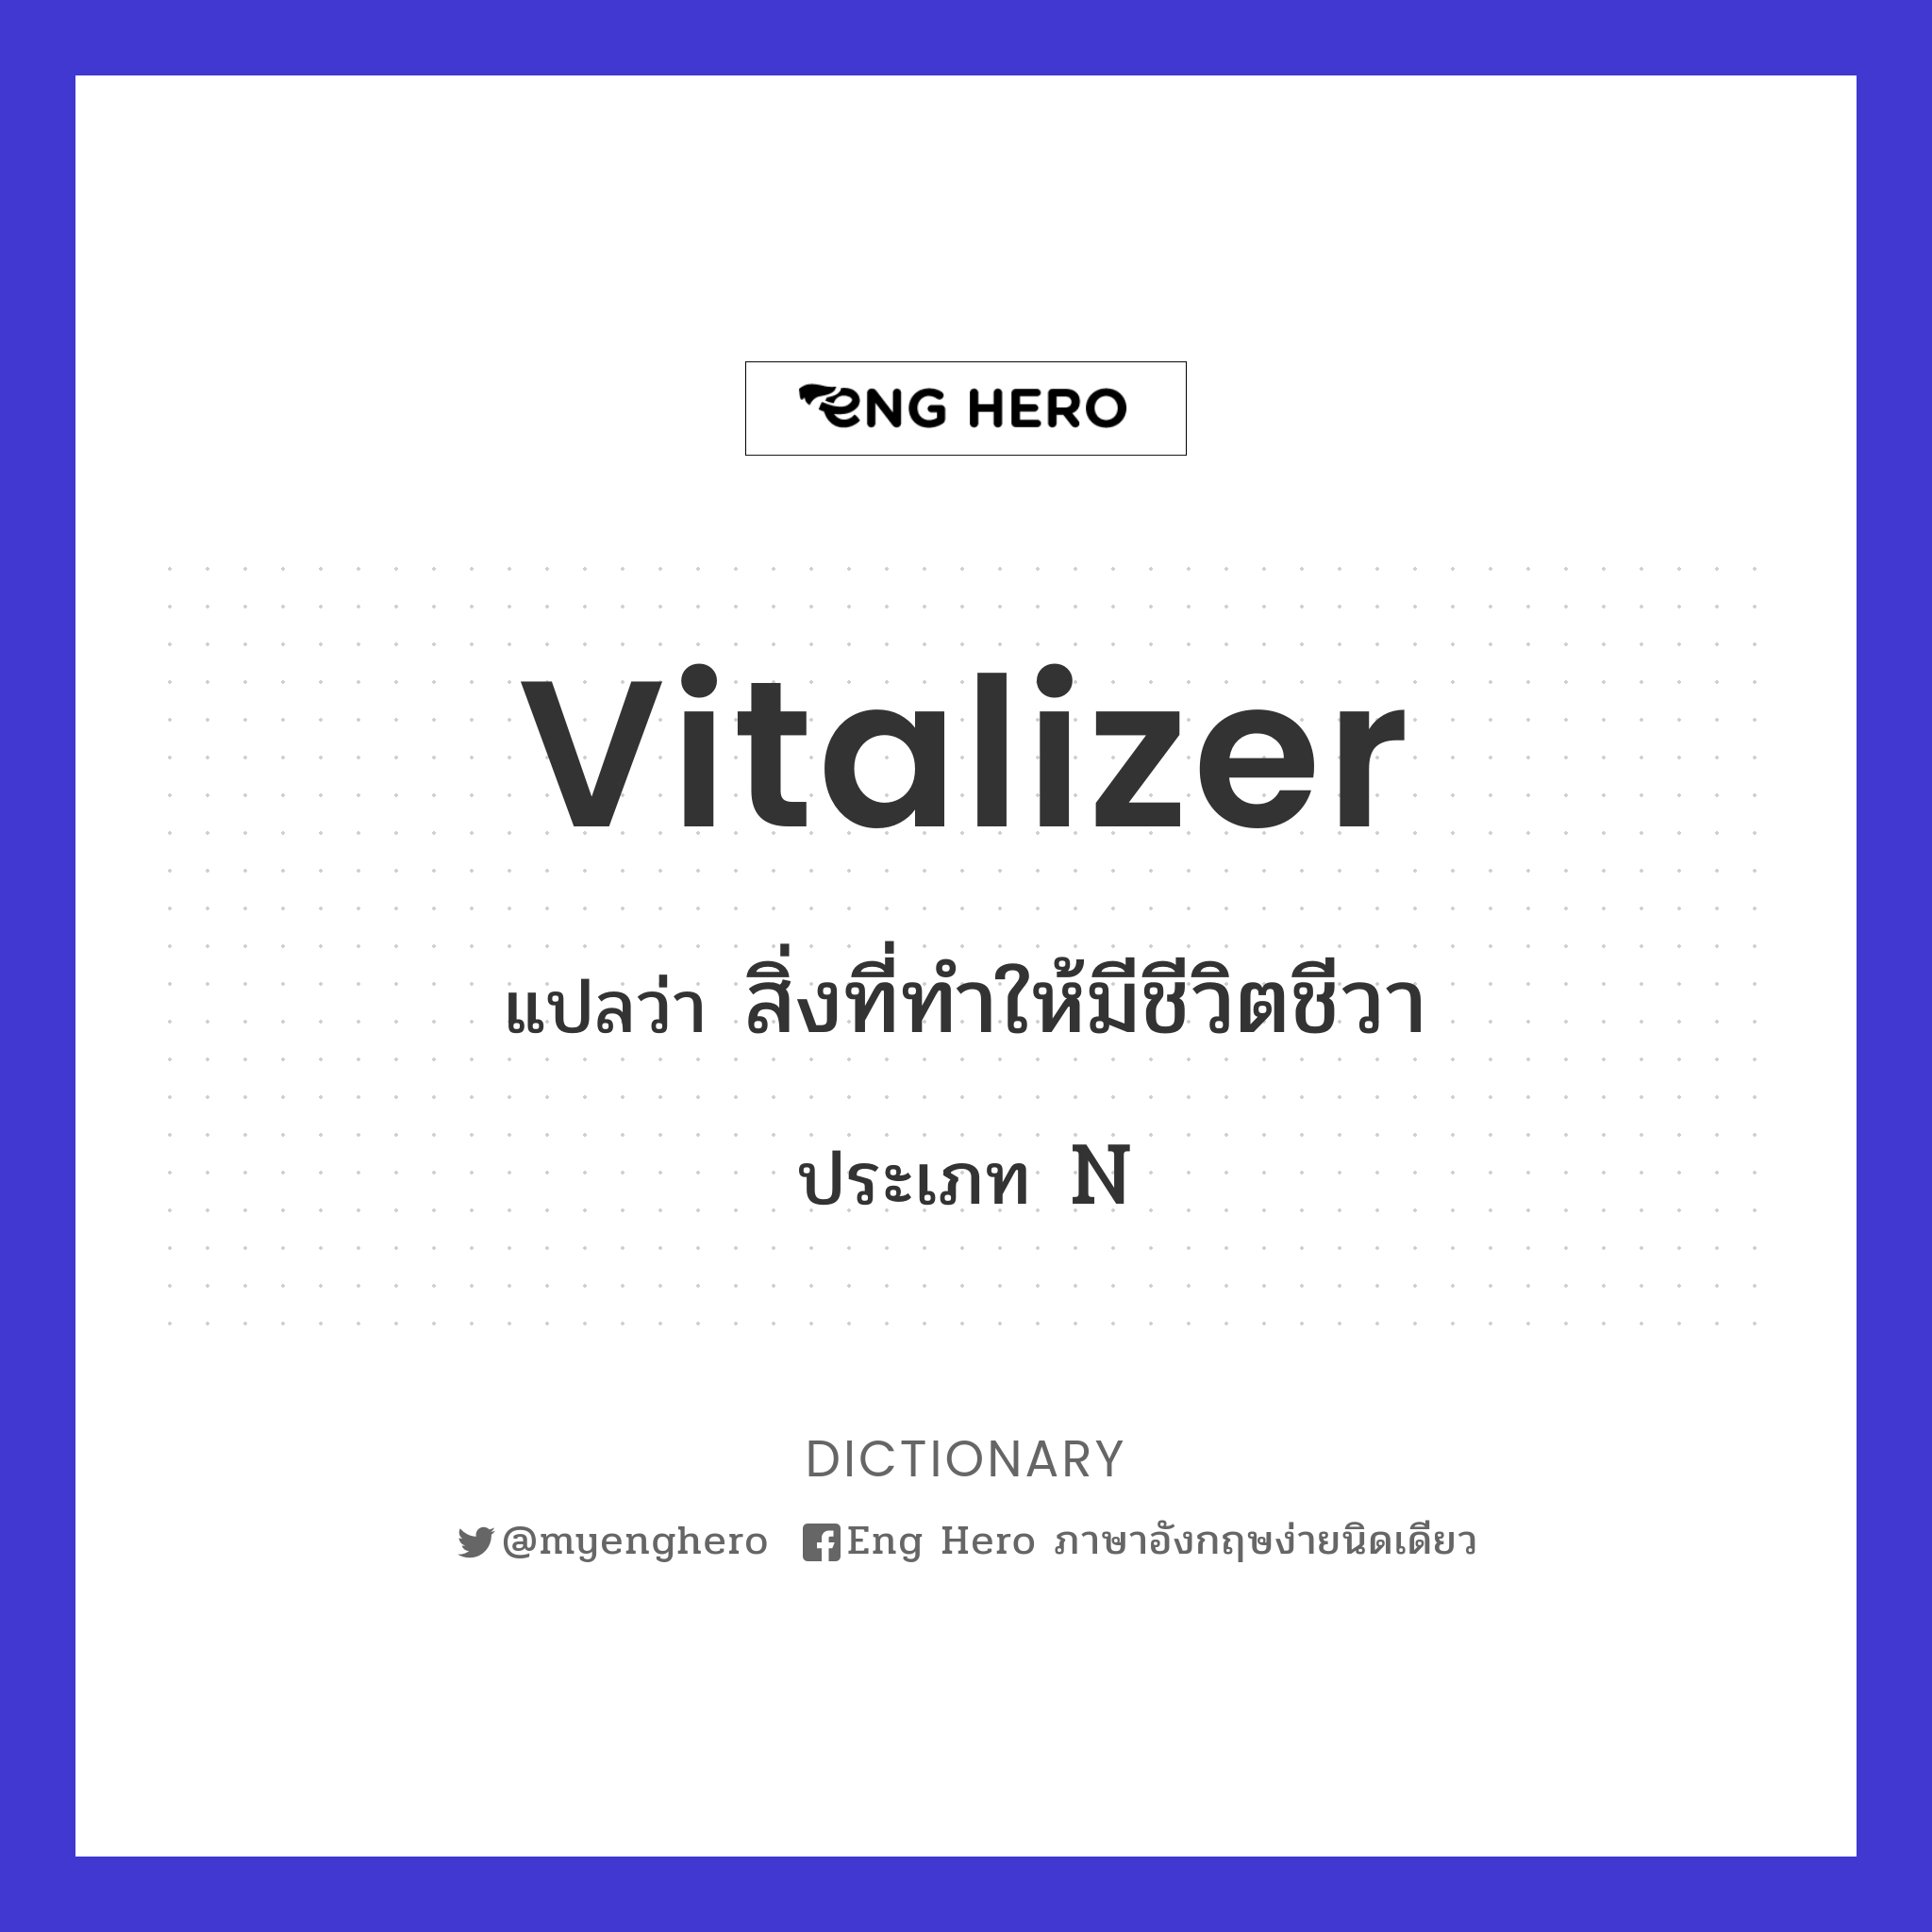 vitalizer